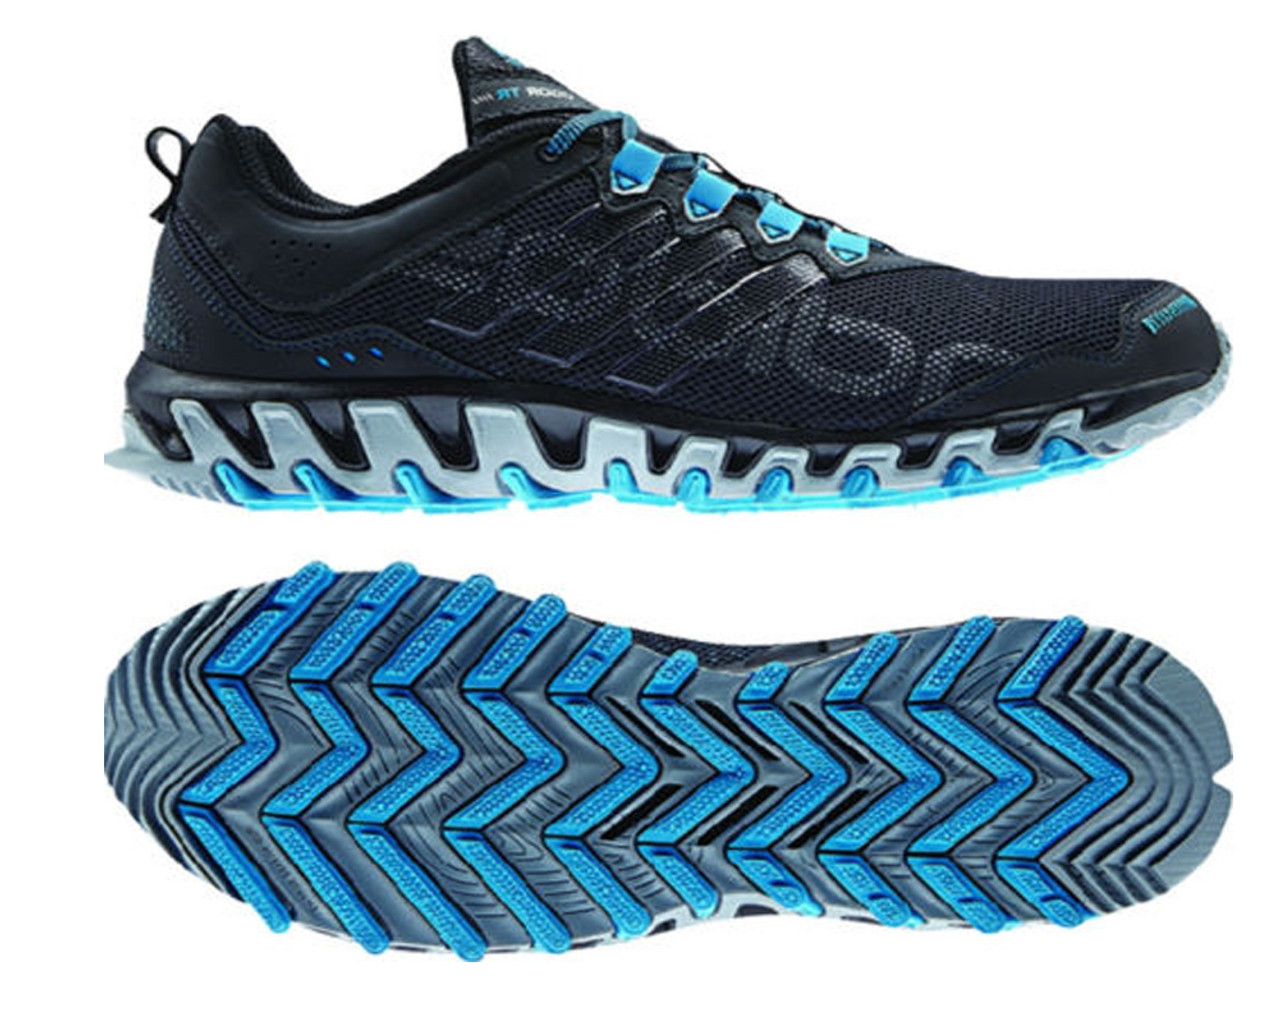 Adidas Men's Vigor 4 TR Running Shoes - Grey | Discount Adidas Men's Athletic & More - Shoolu.com | Shoolu.com